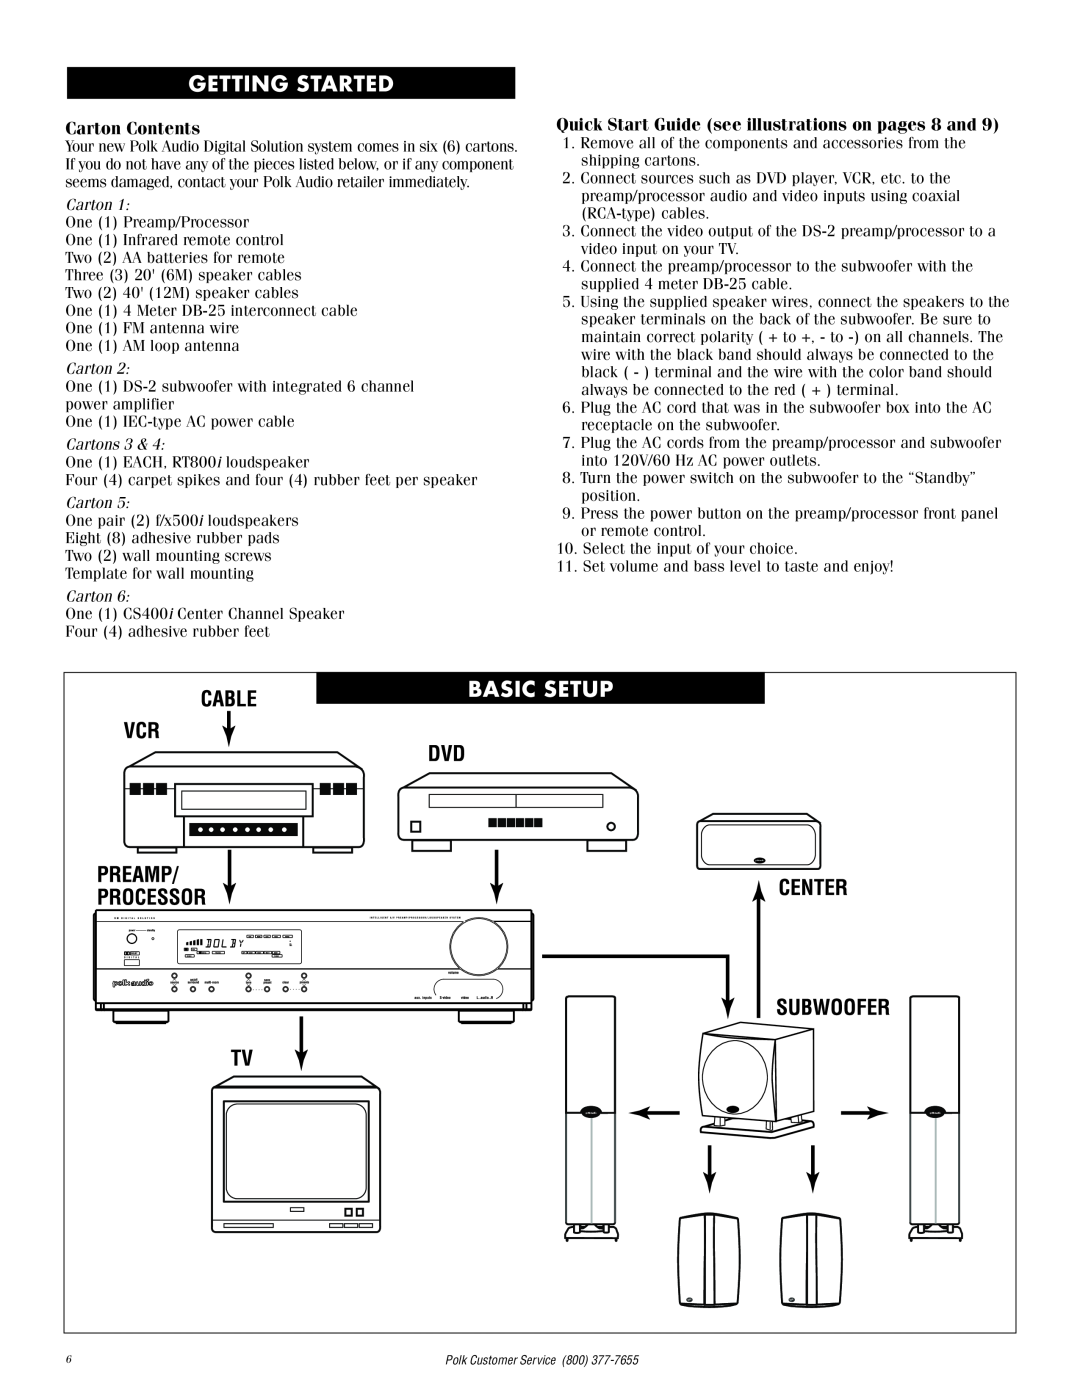 Polk Audio 2 instruction manual Getting Started, Carton Contents, Cartons, Basic Setup 